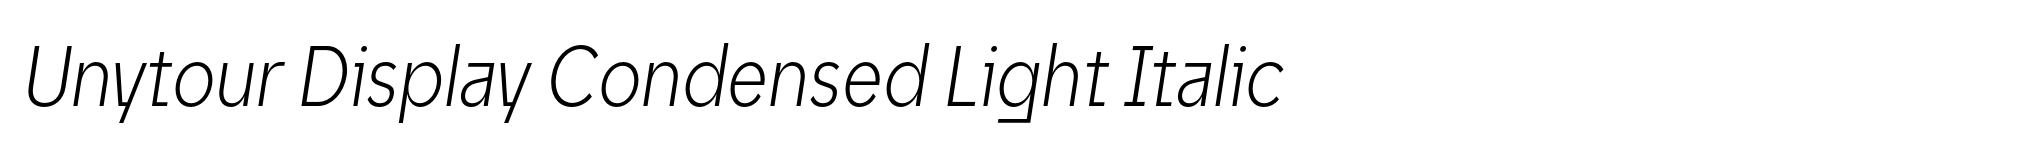 Unytour Display Condensed Light Italic image